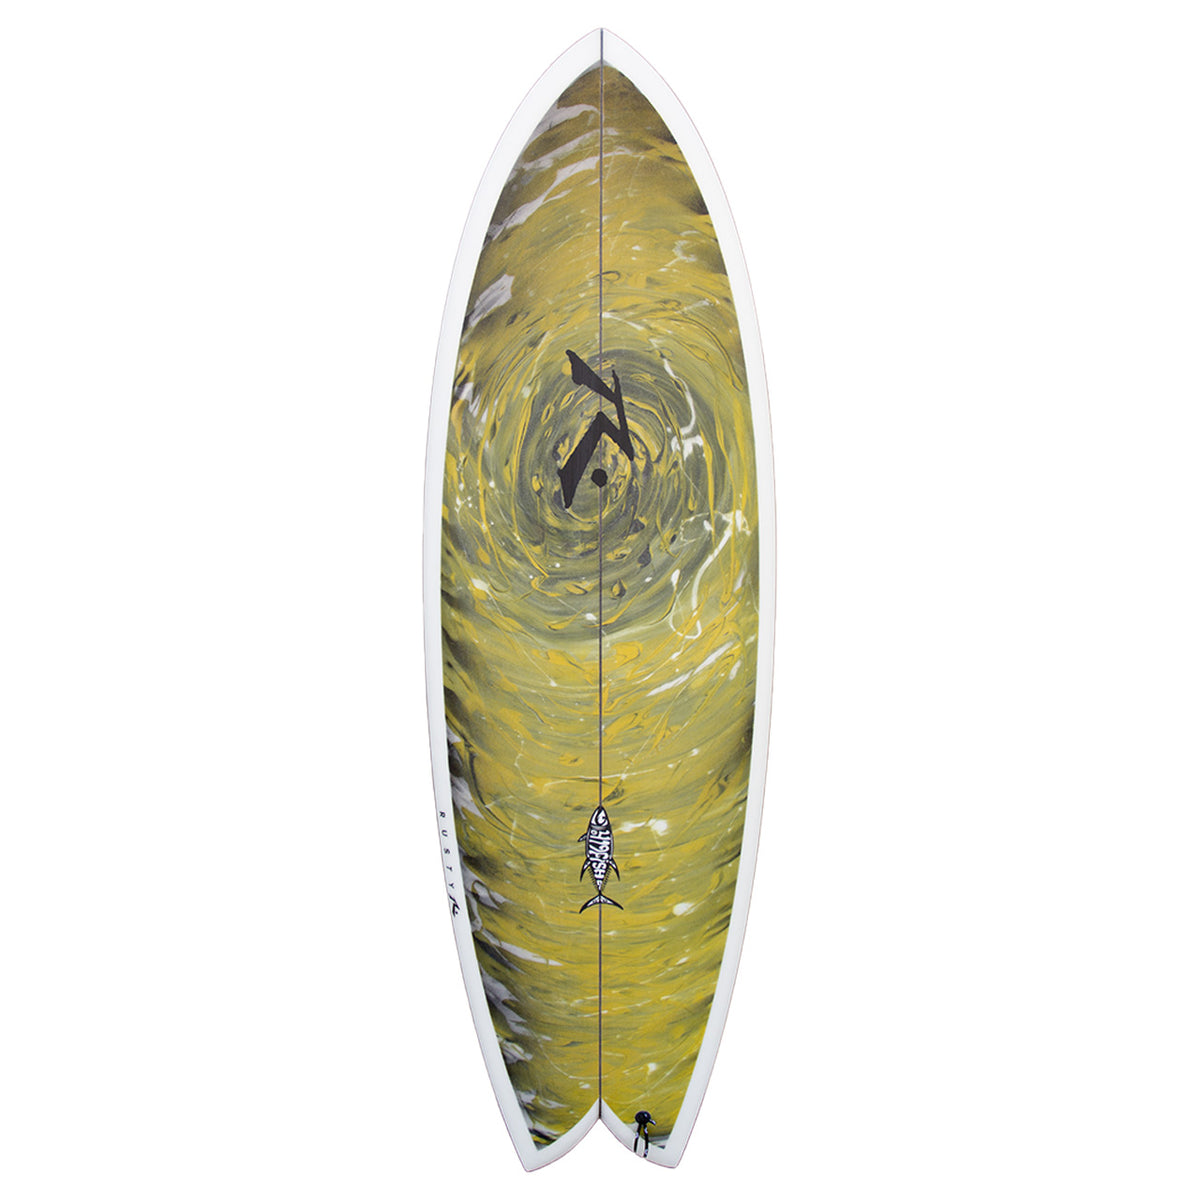 419fish - Alternative - Rusty Surfboards - Top View - Gold Swirl